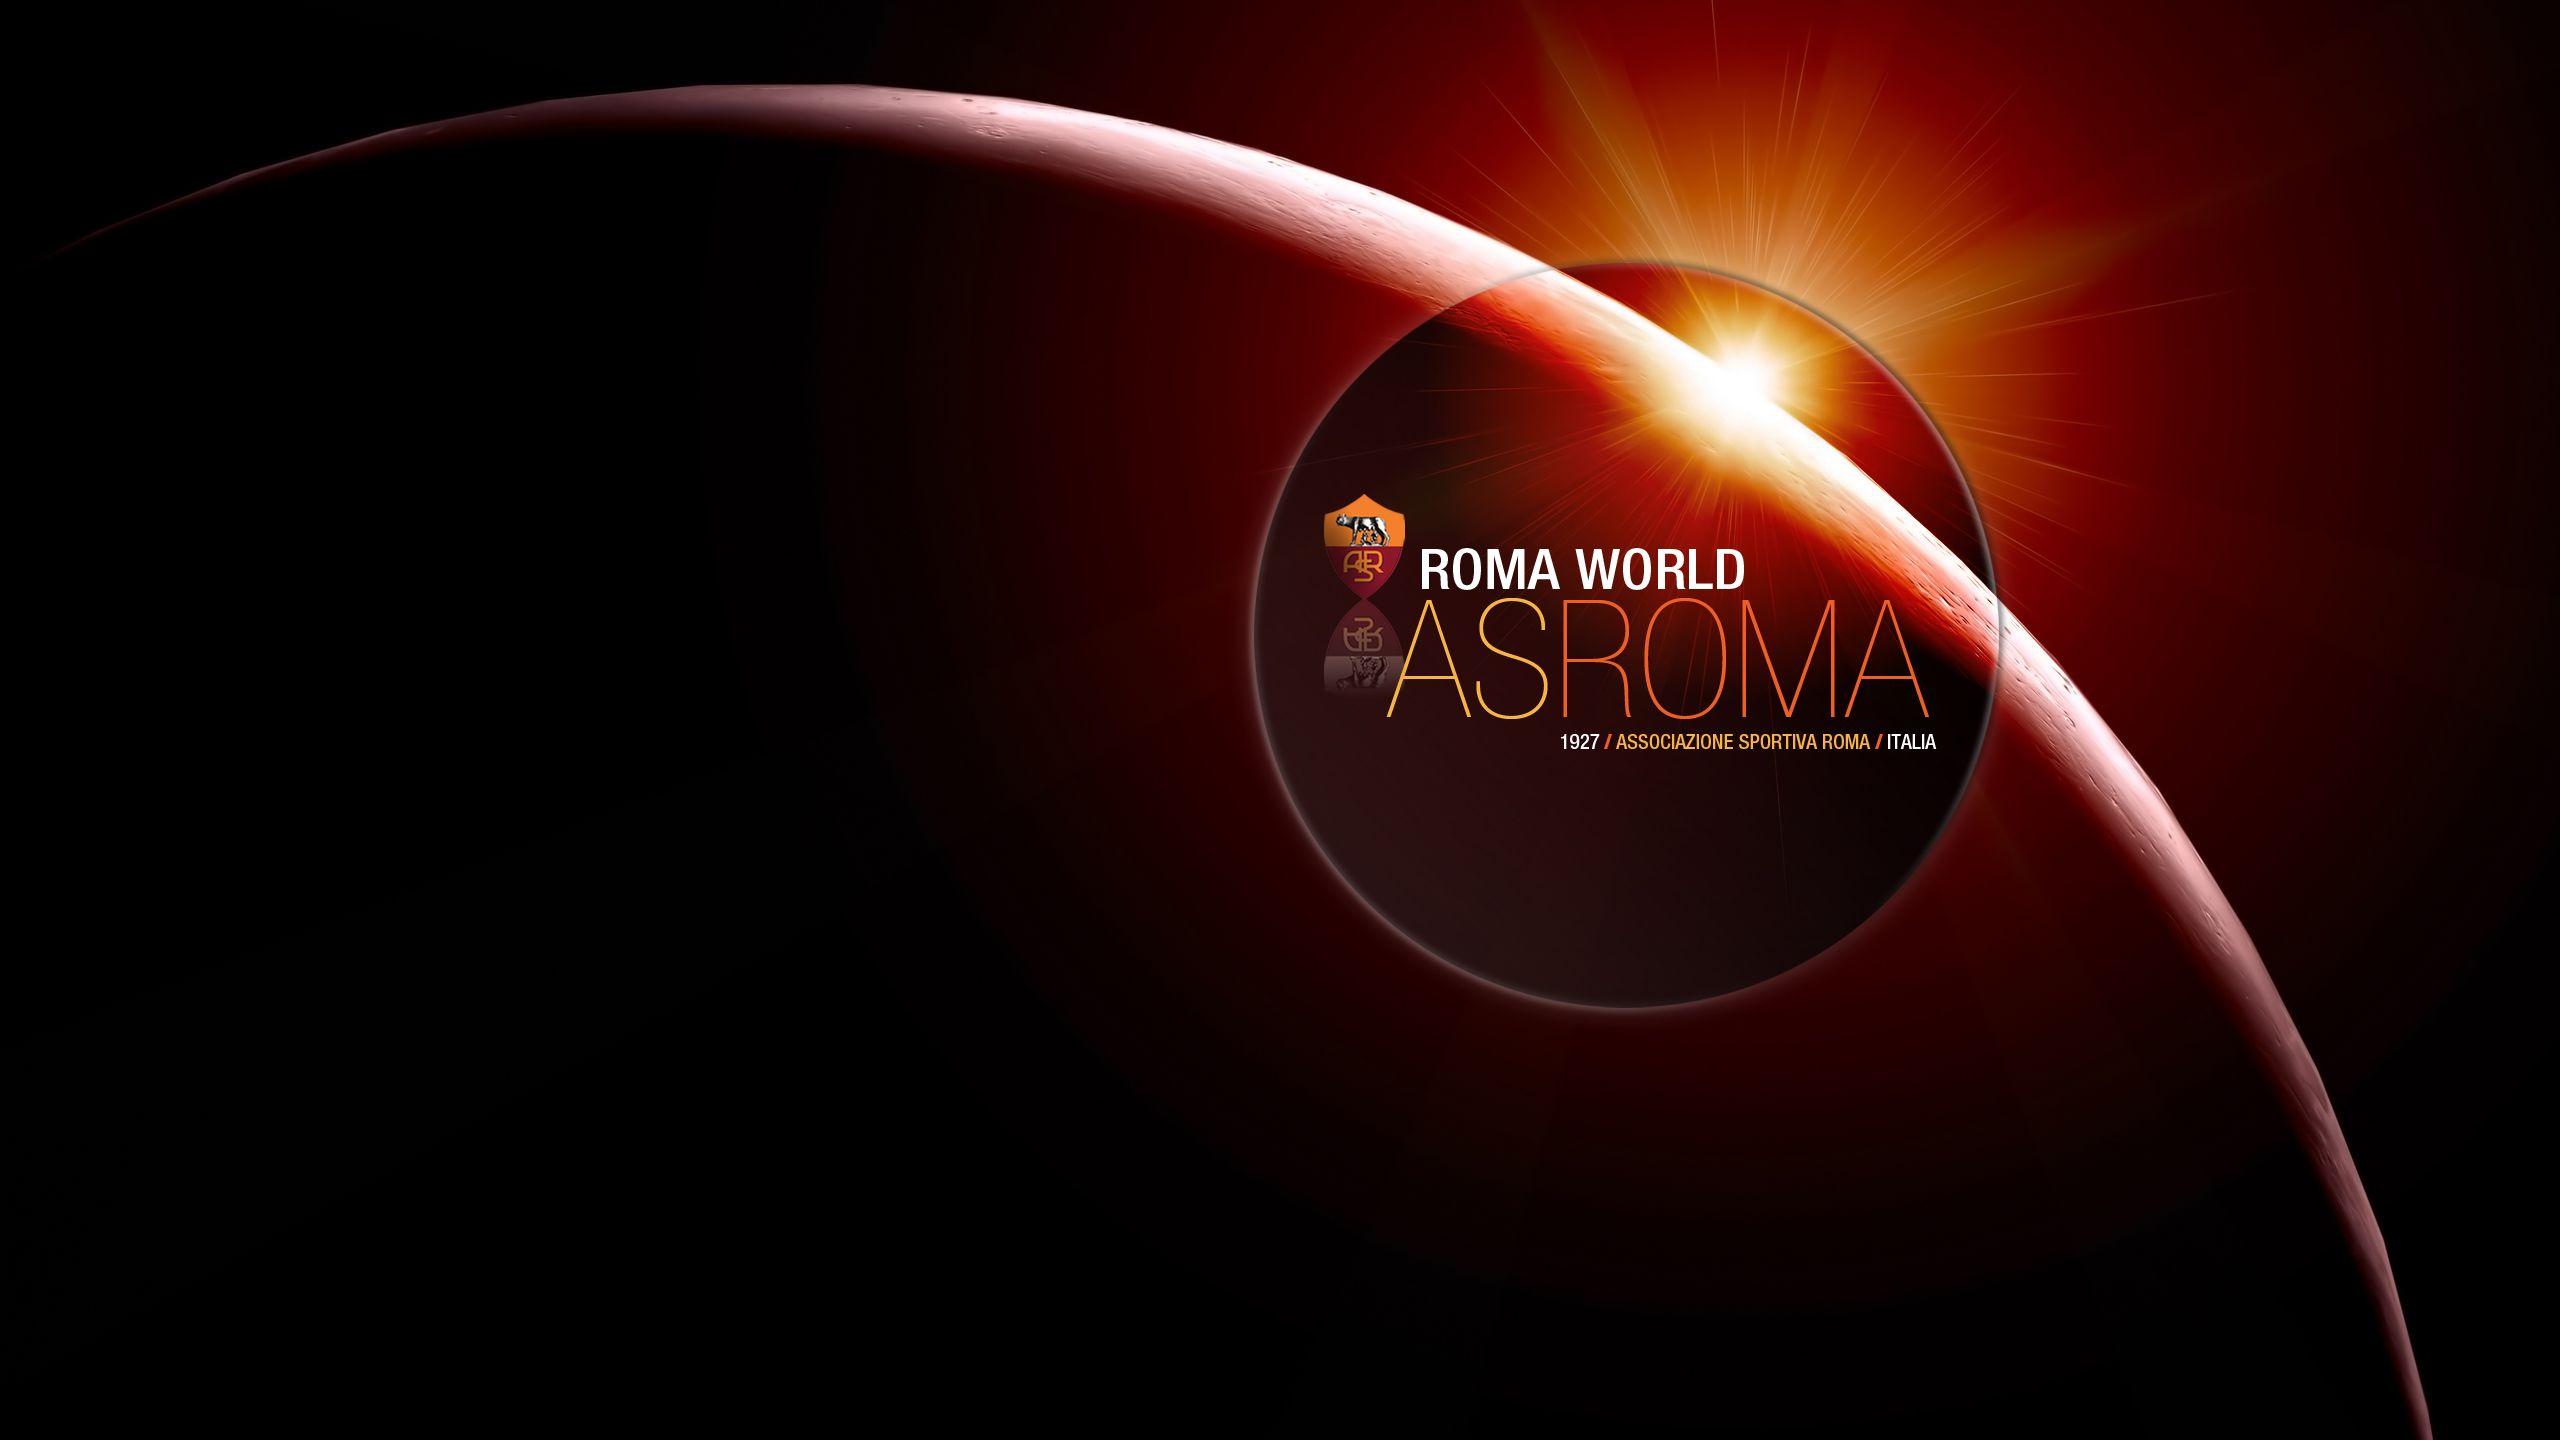 As Roma Logo Wallpaper Free Download. HD Wallpaper, Background